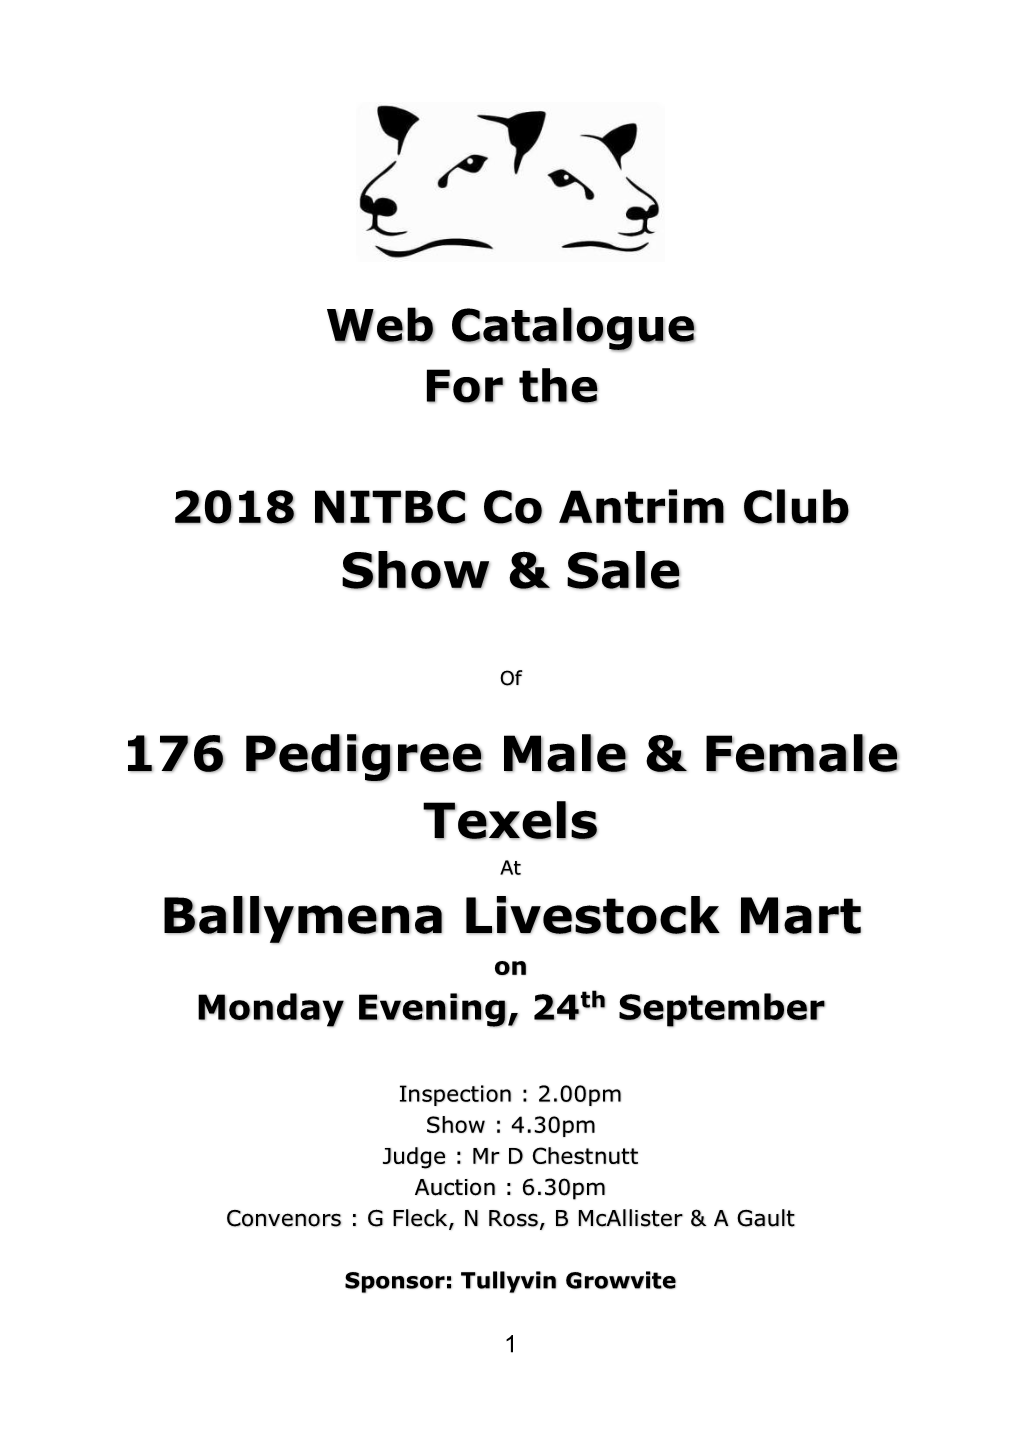 Show & Sale 176 Pedigree Male & Female Texels Ballymena Livestock